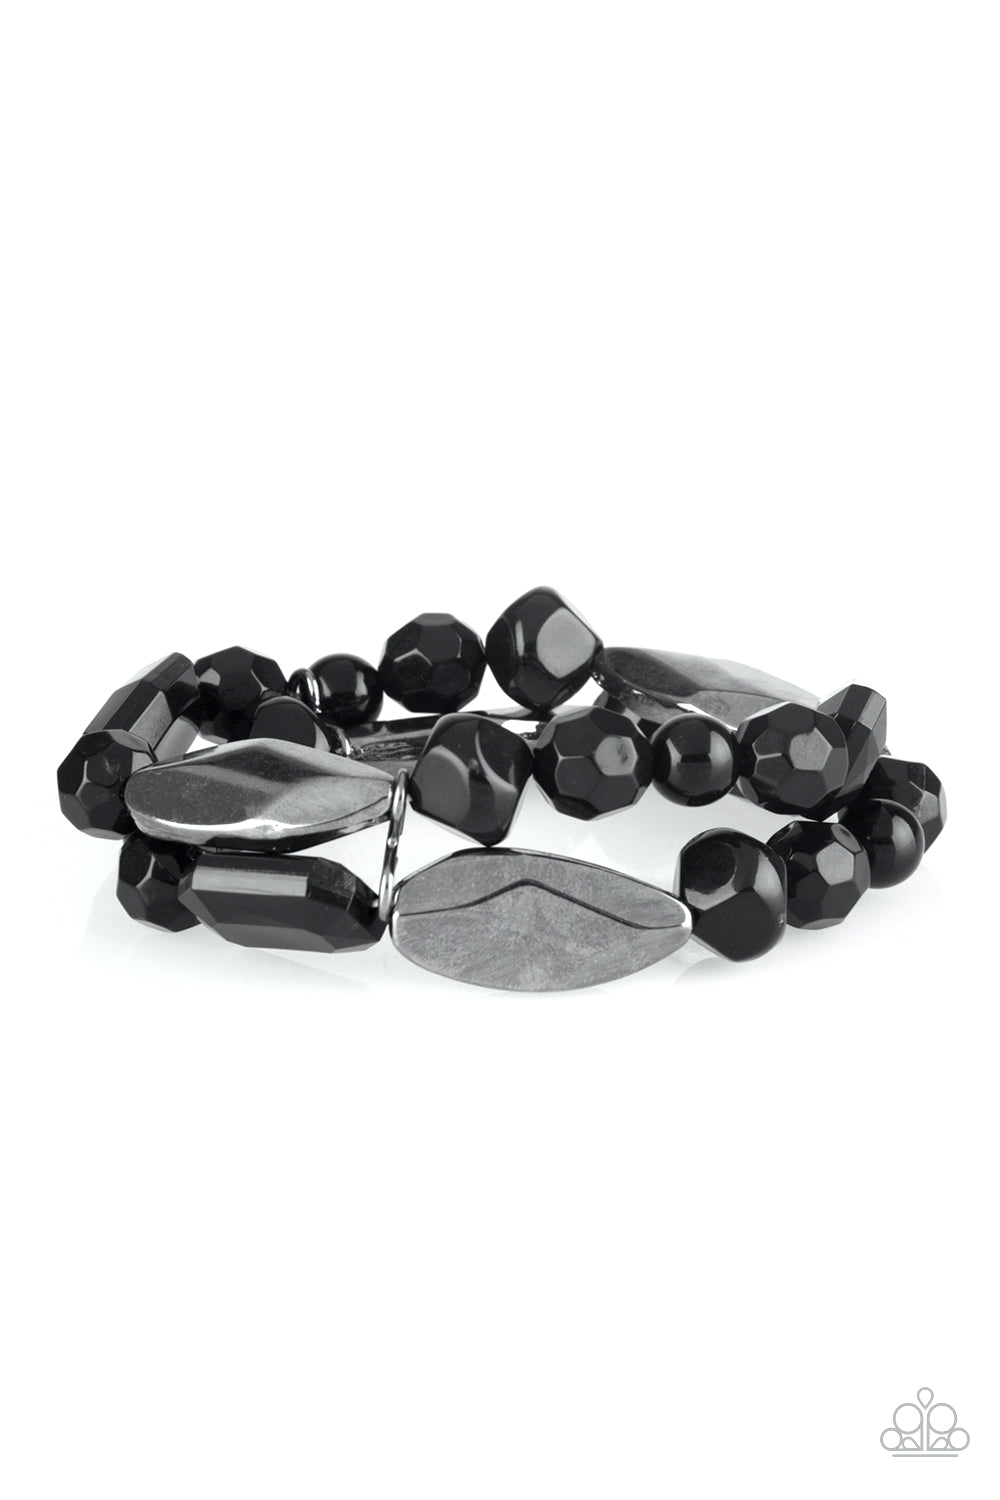 Rockin Rock Candy - Black Bracelet - Paparazzi Accessories - Alies Bling Bar